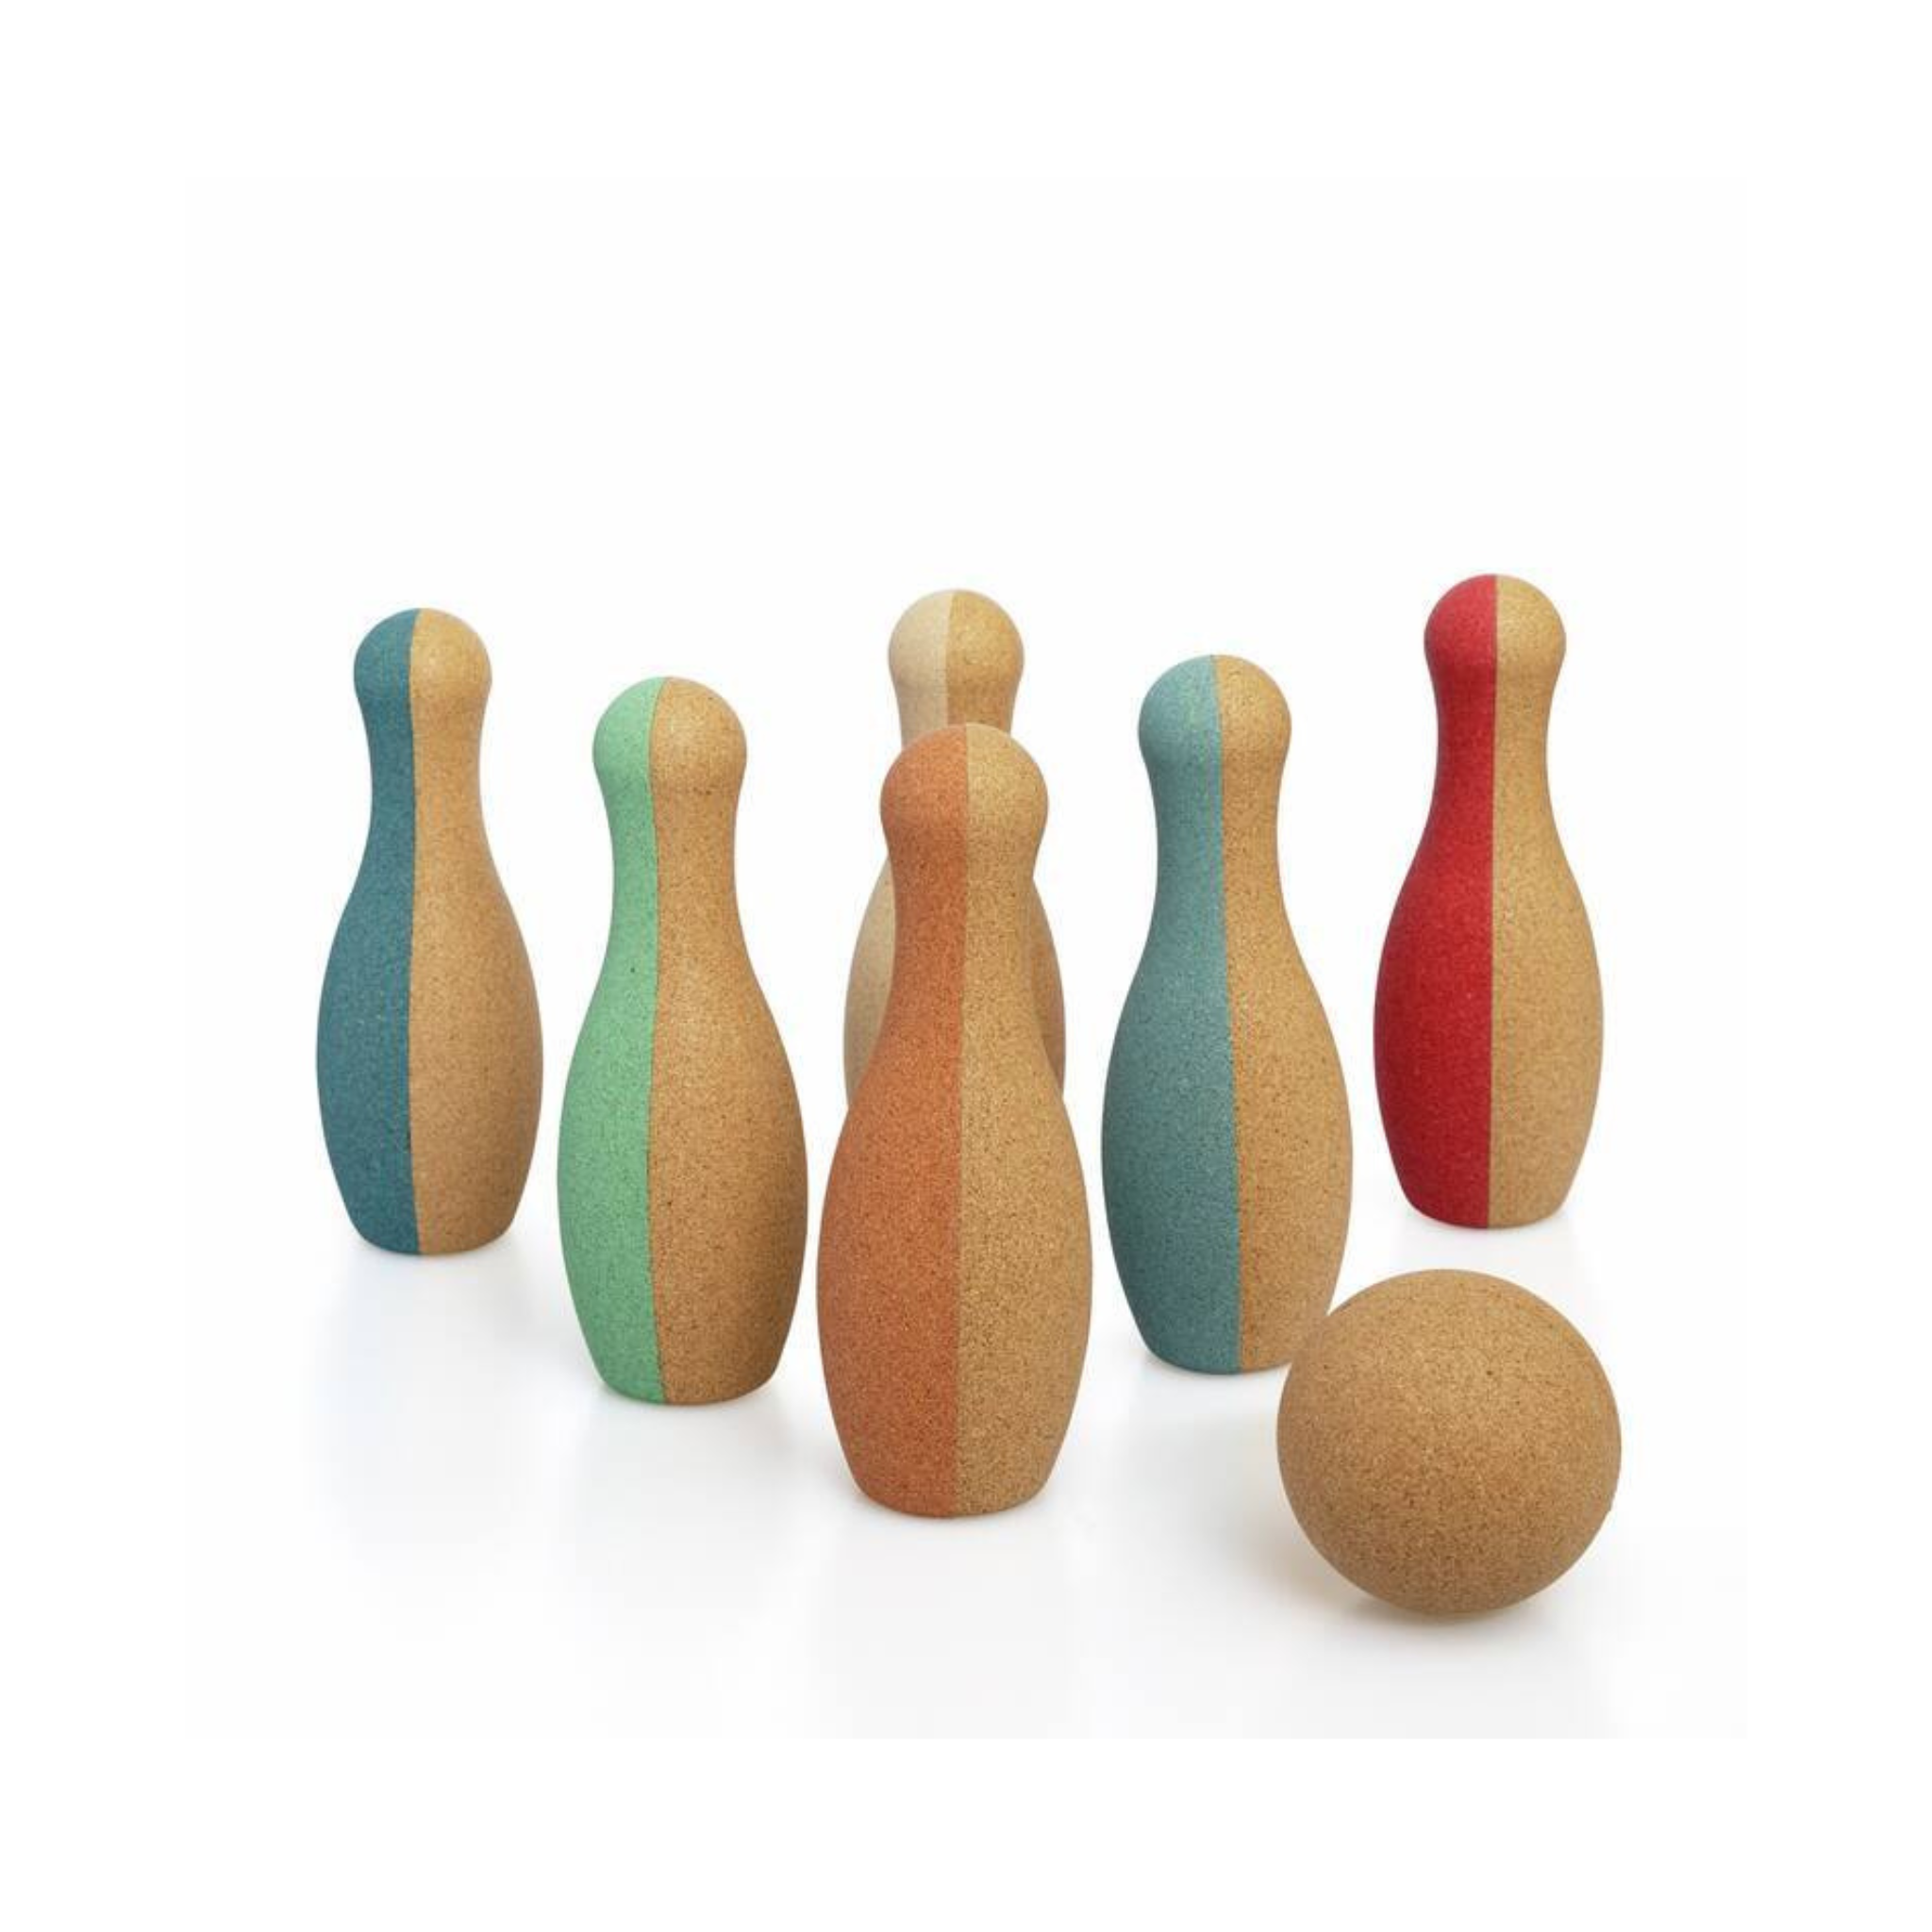 A colourful bowling set